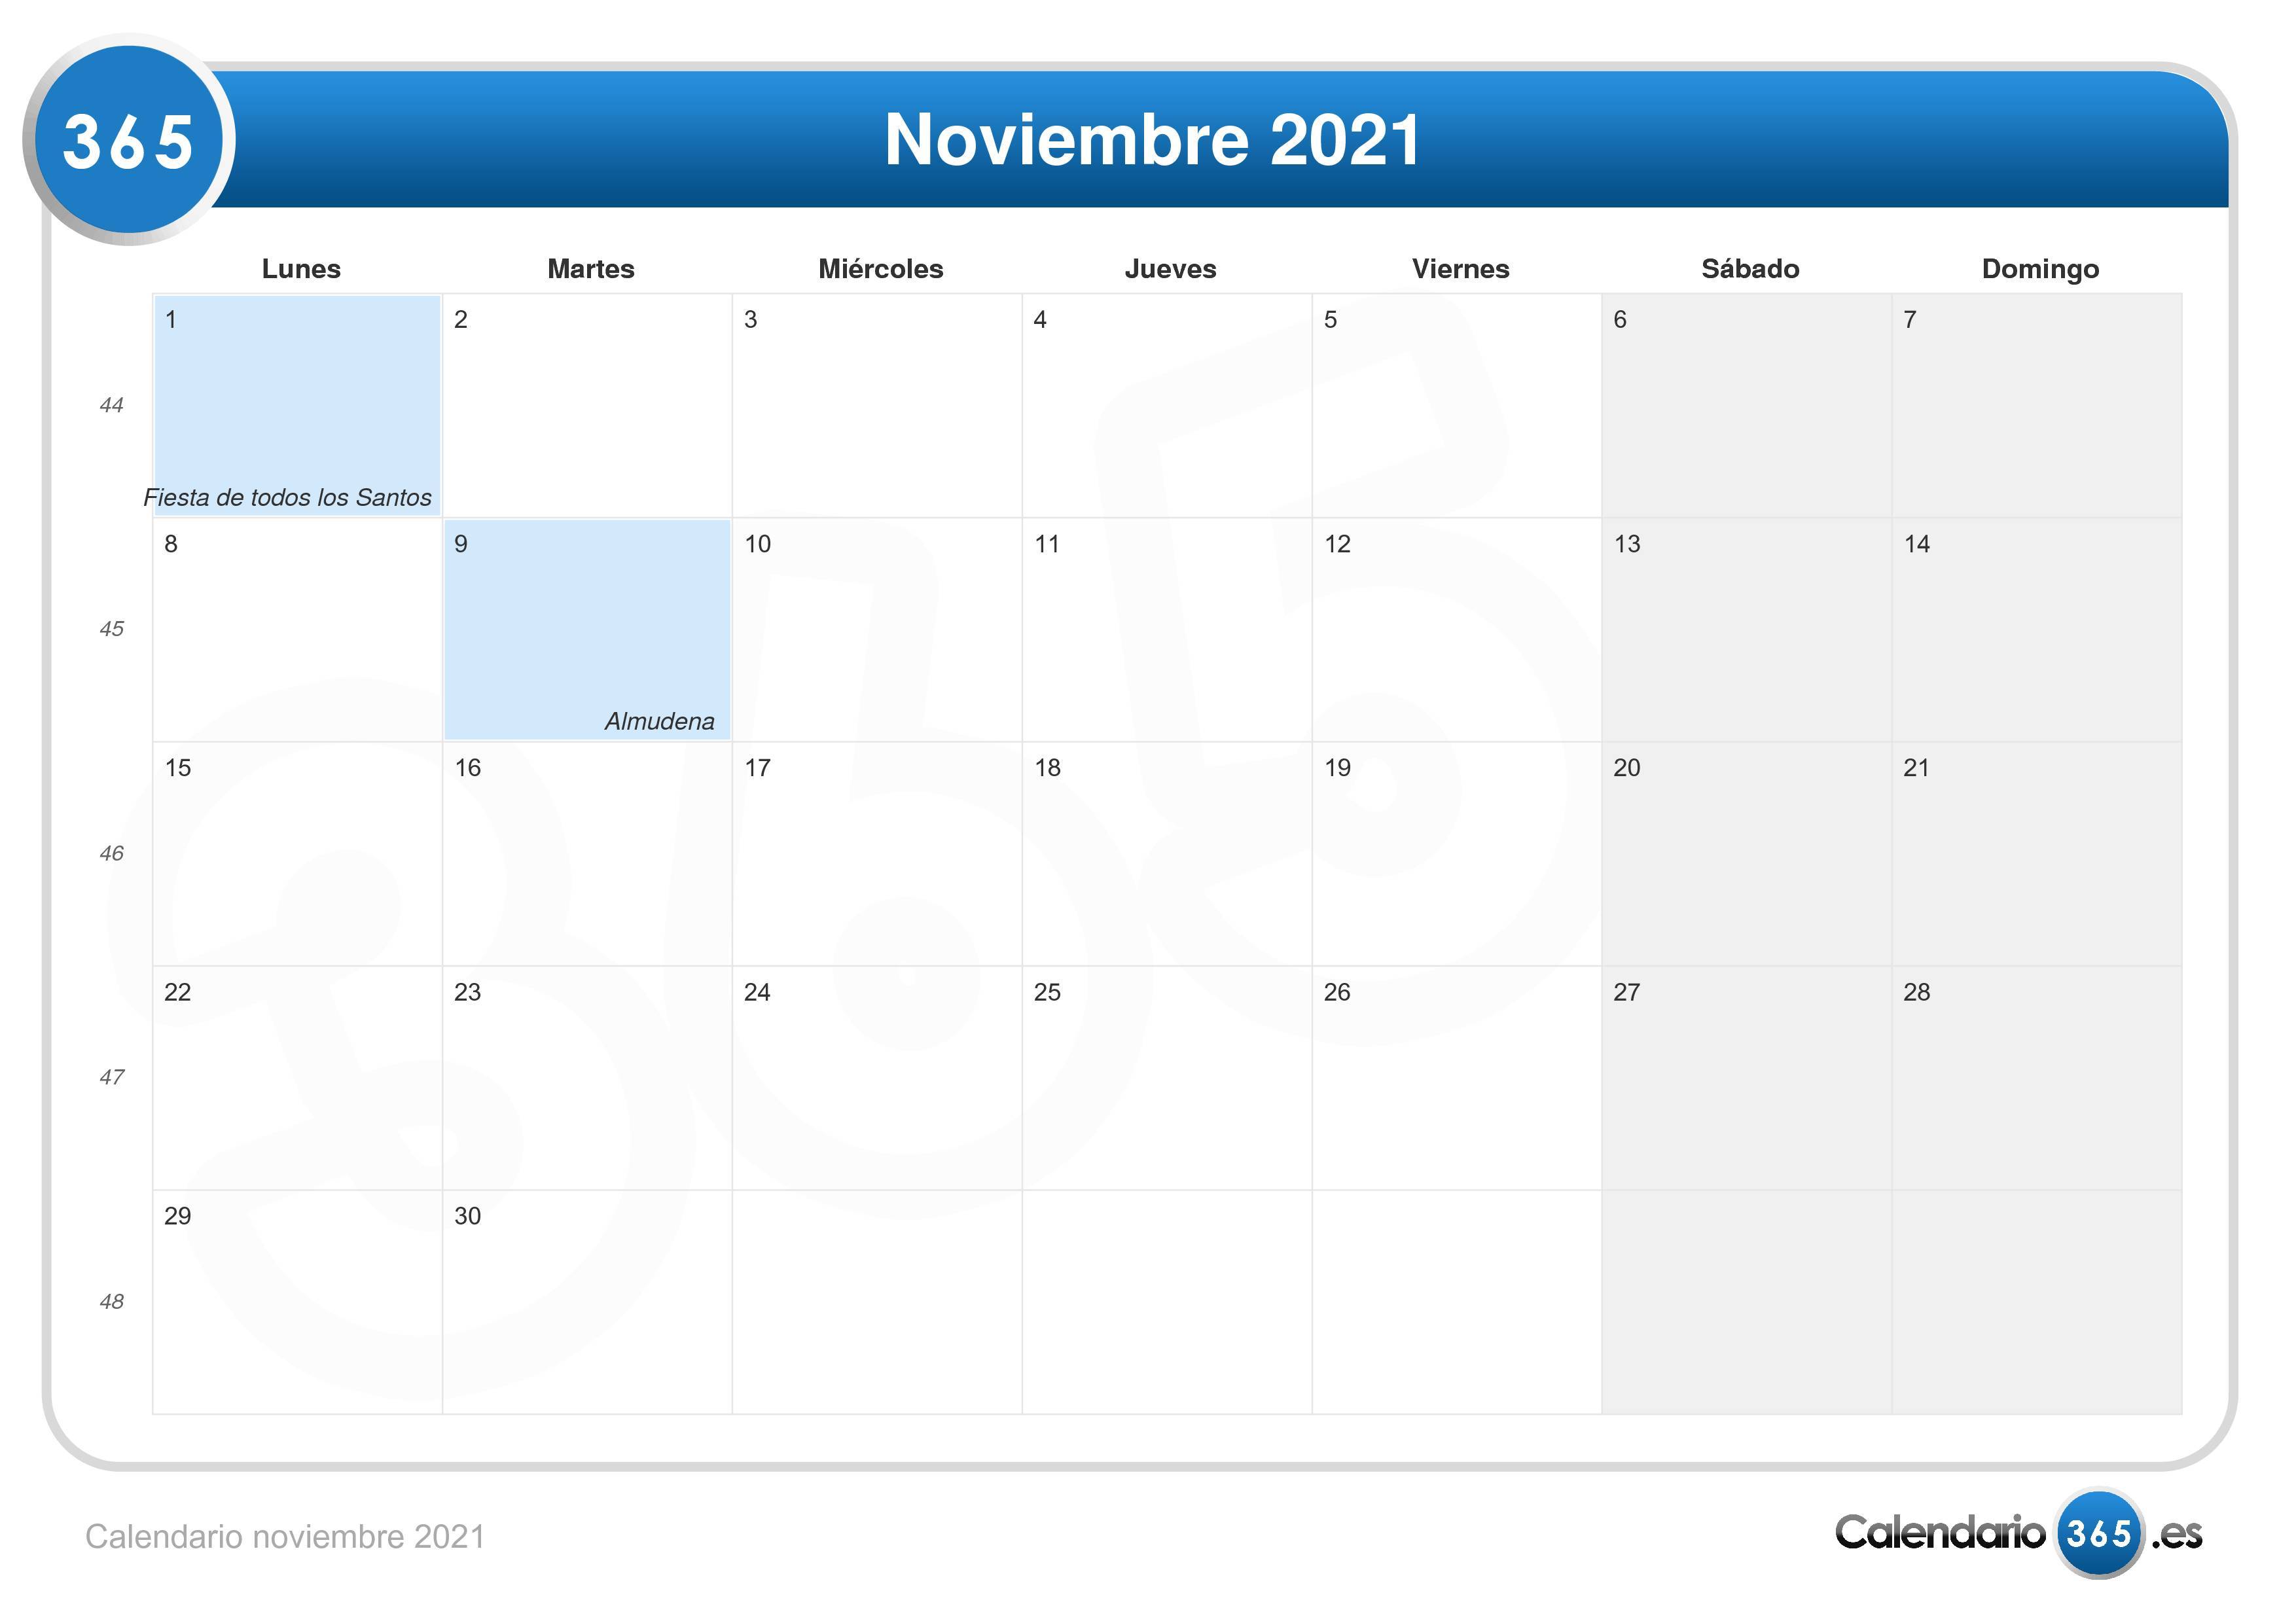 Calendario Noviembre 2021 The Promised Neverland